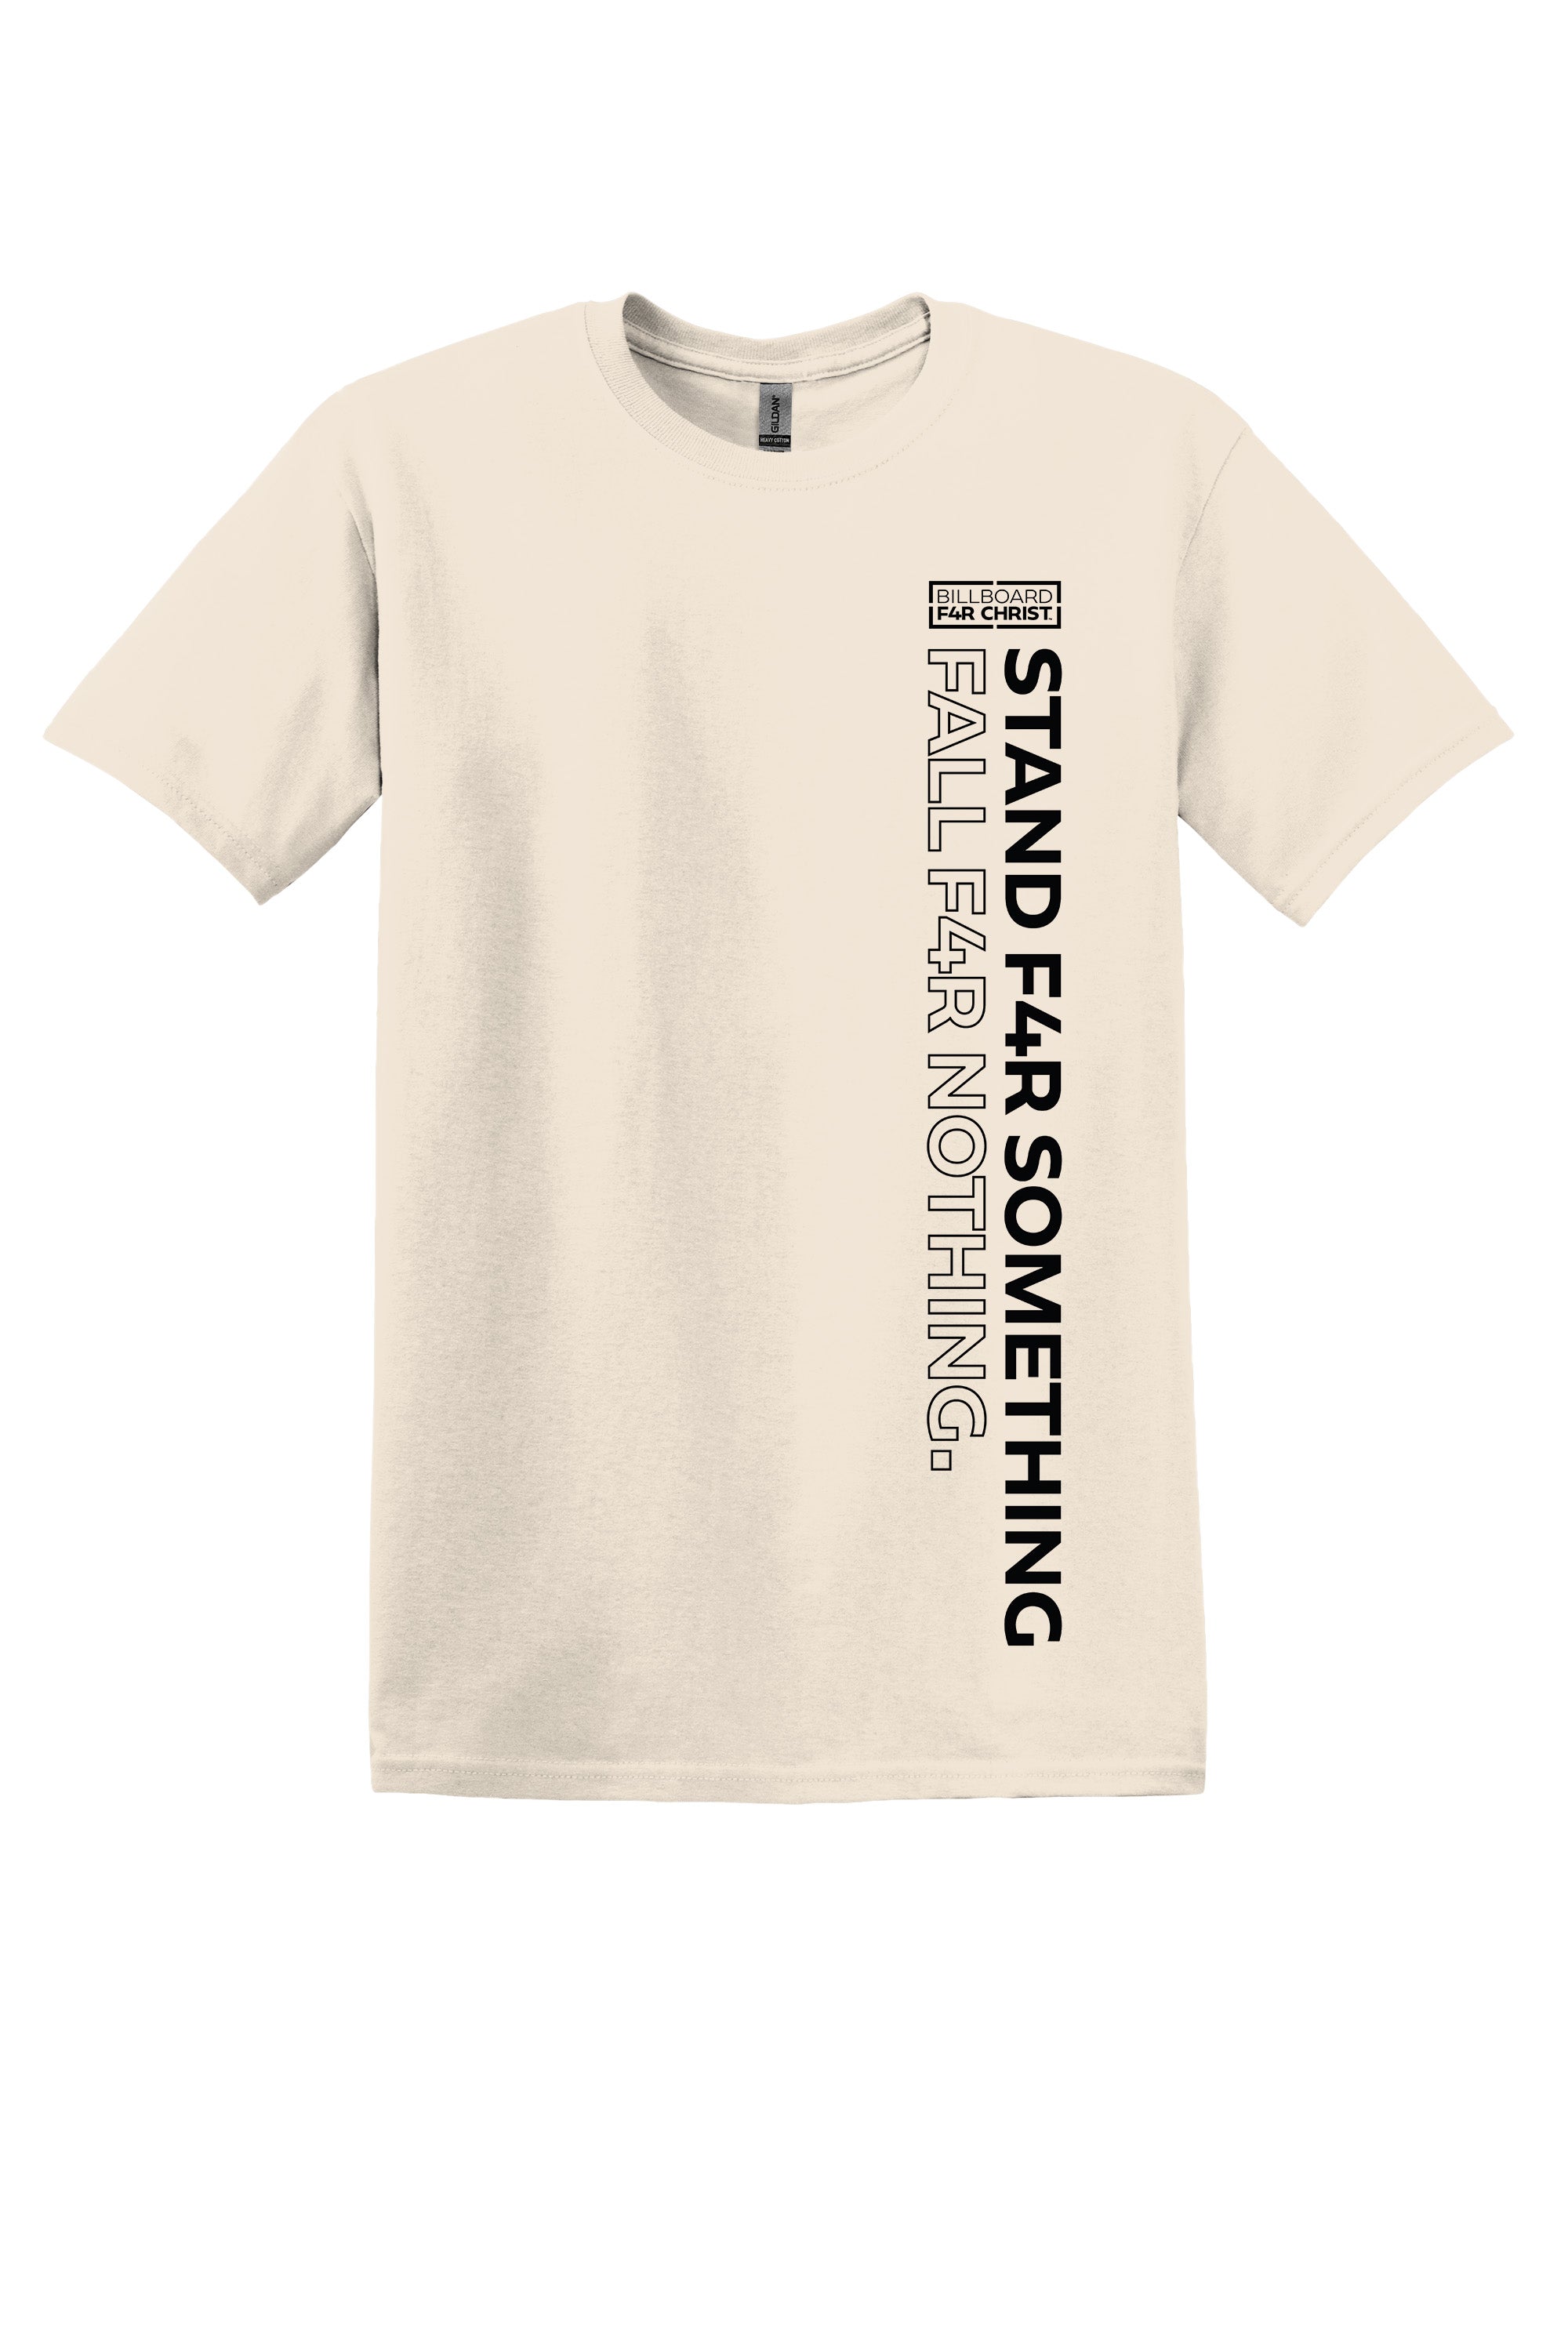 Stand F4R Something Men's Soft T-Shirt